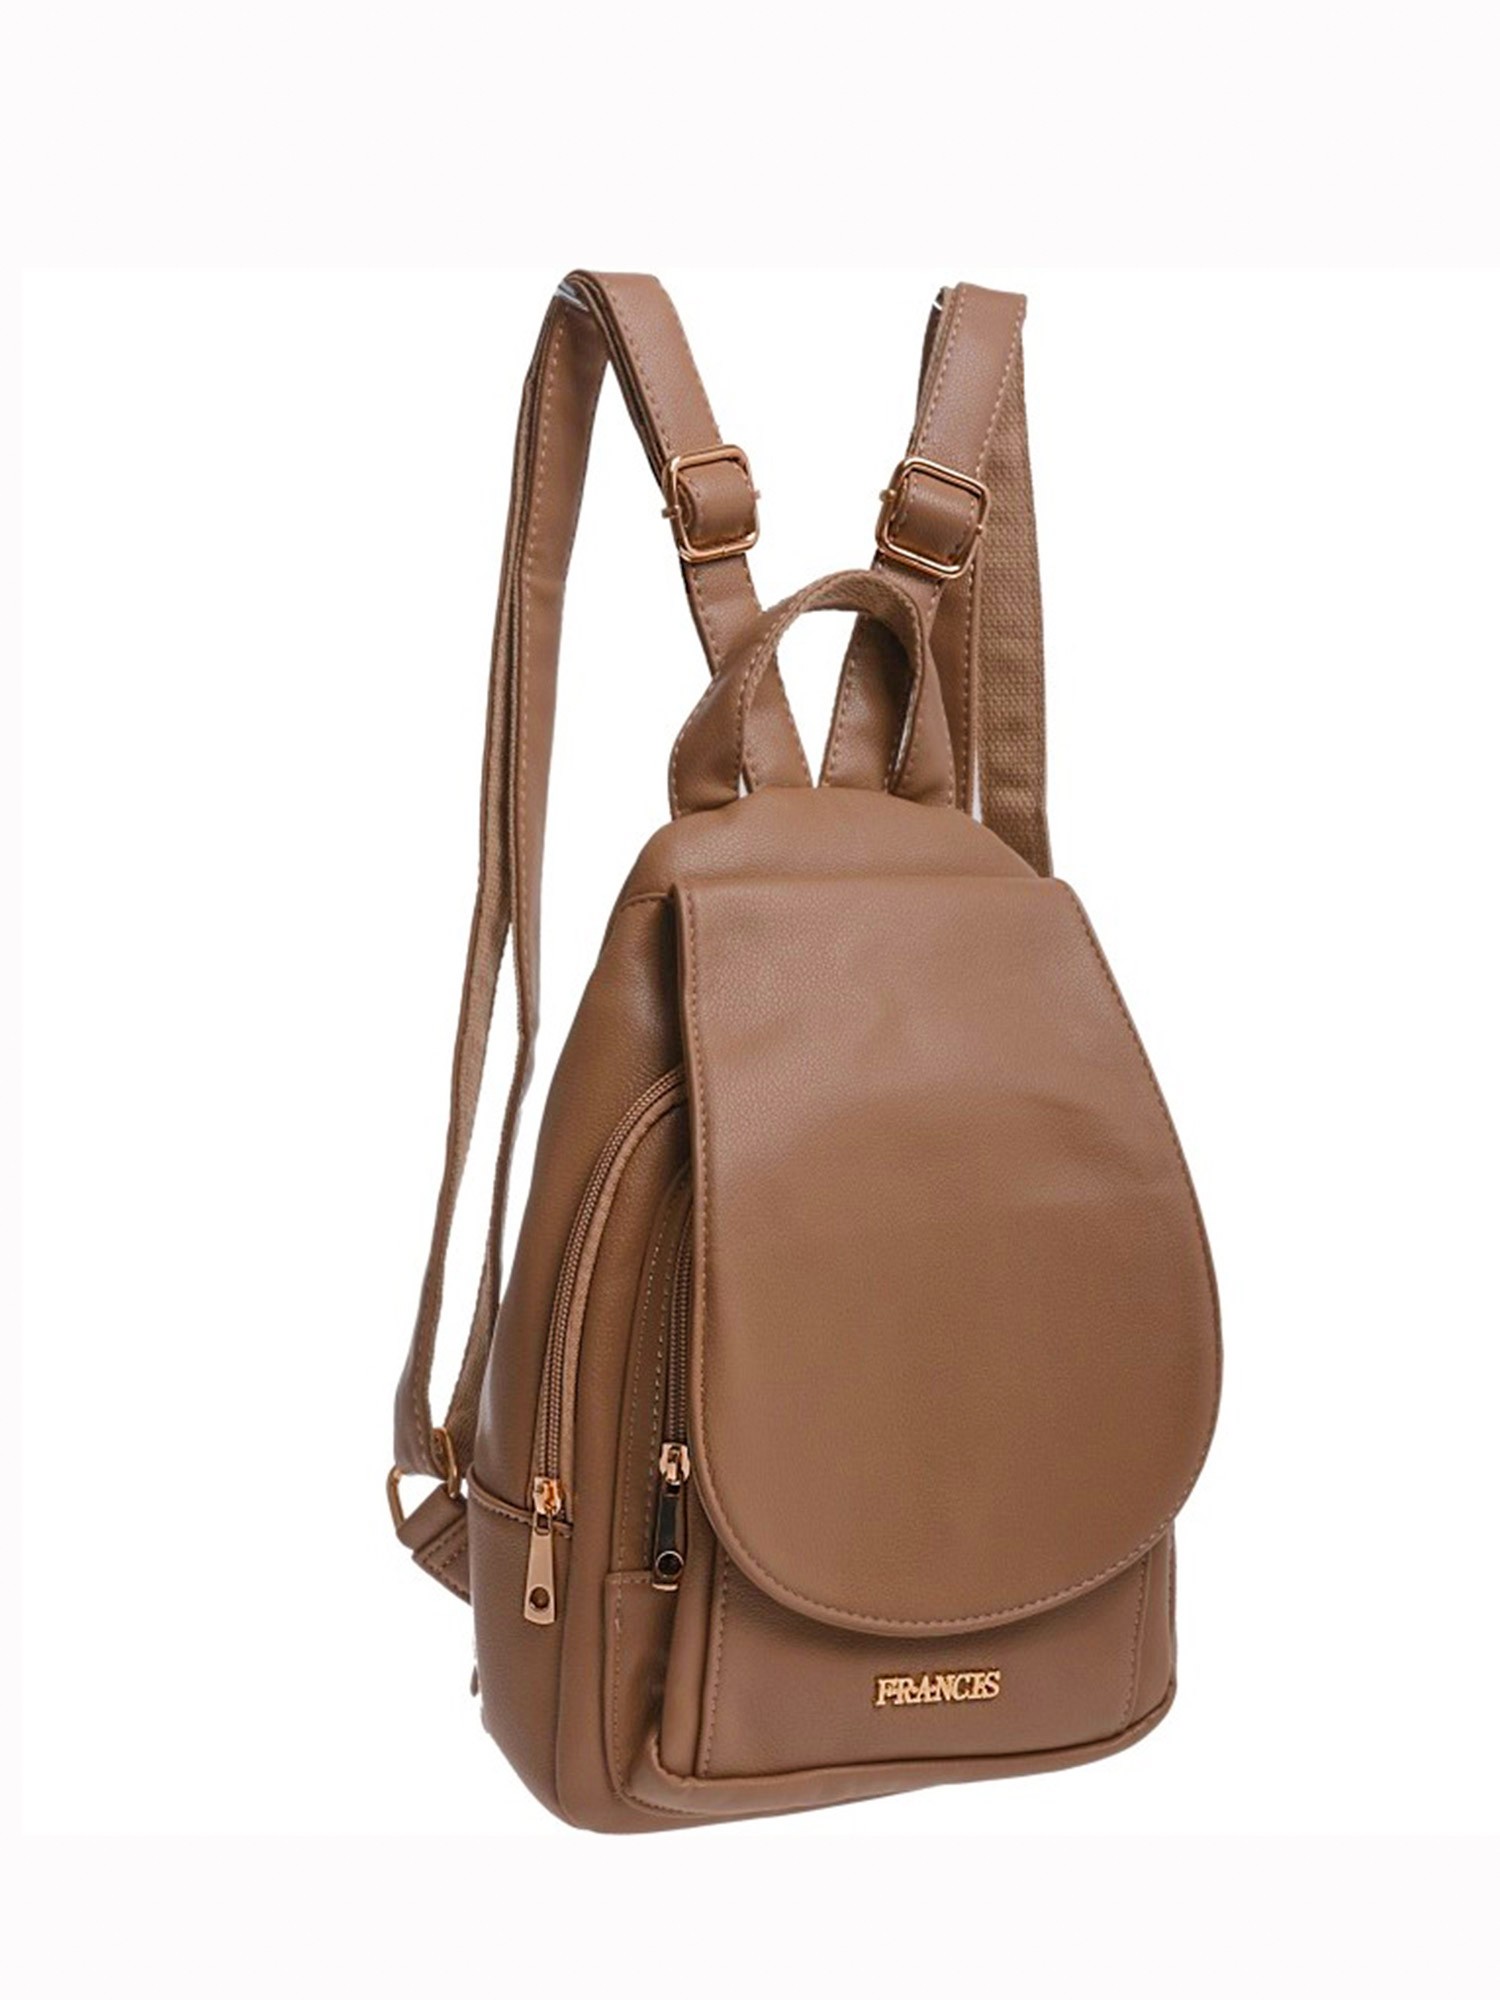 Dark beige women's backpack with magnetic closure